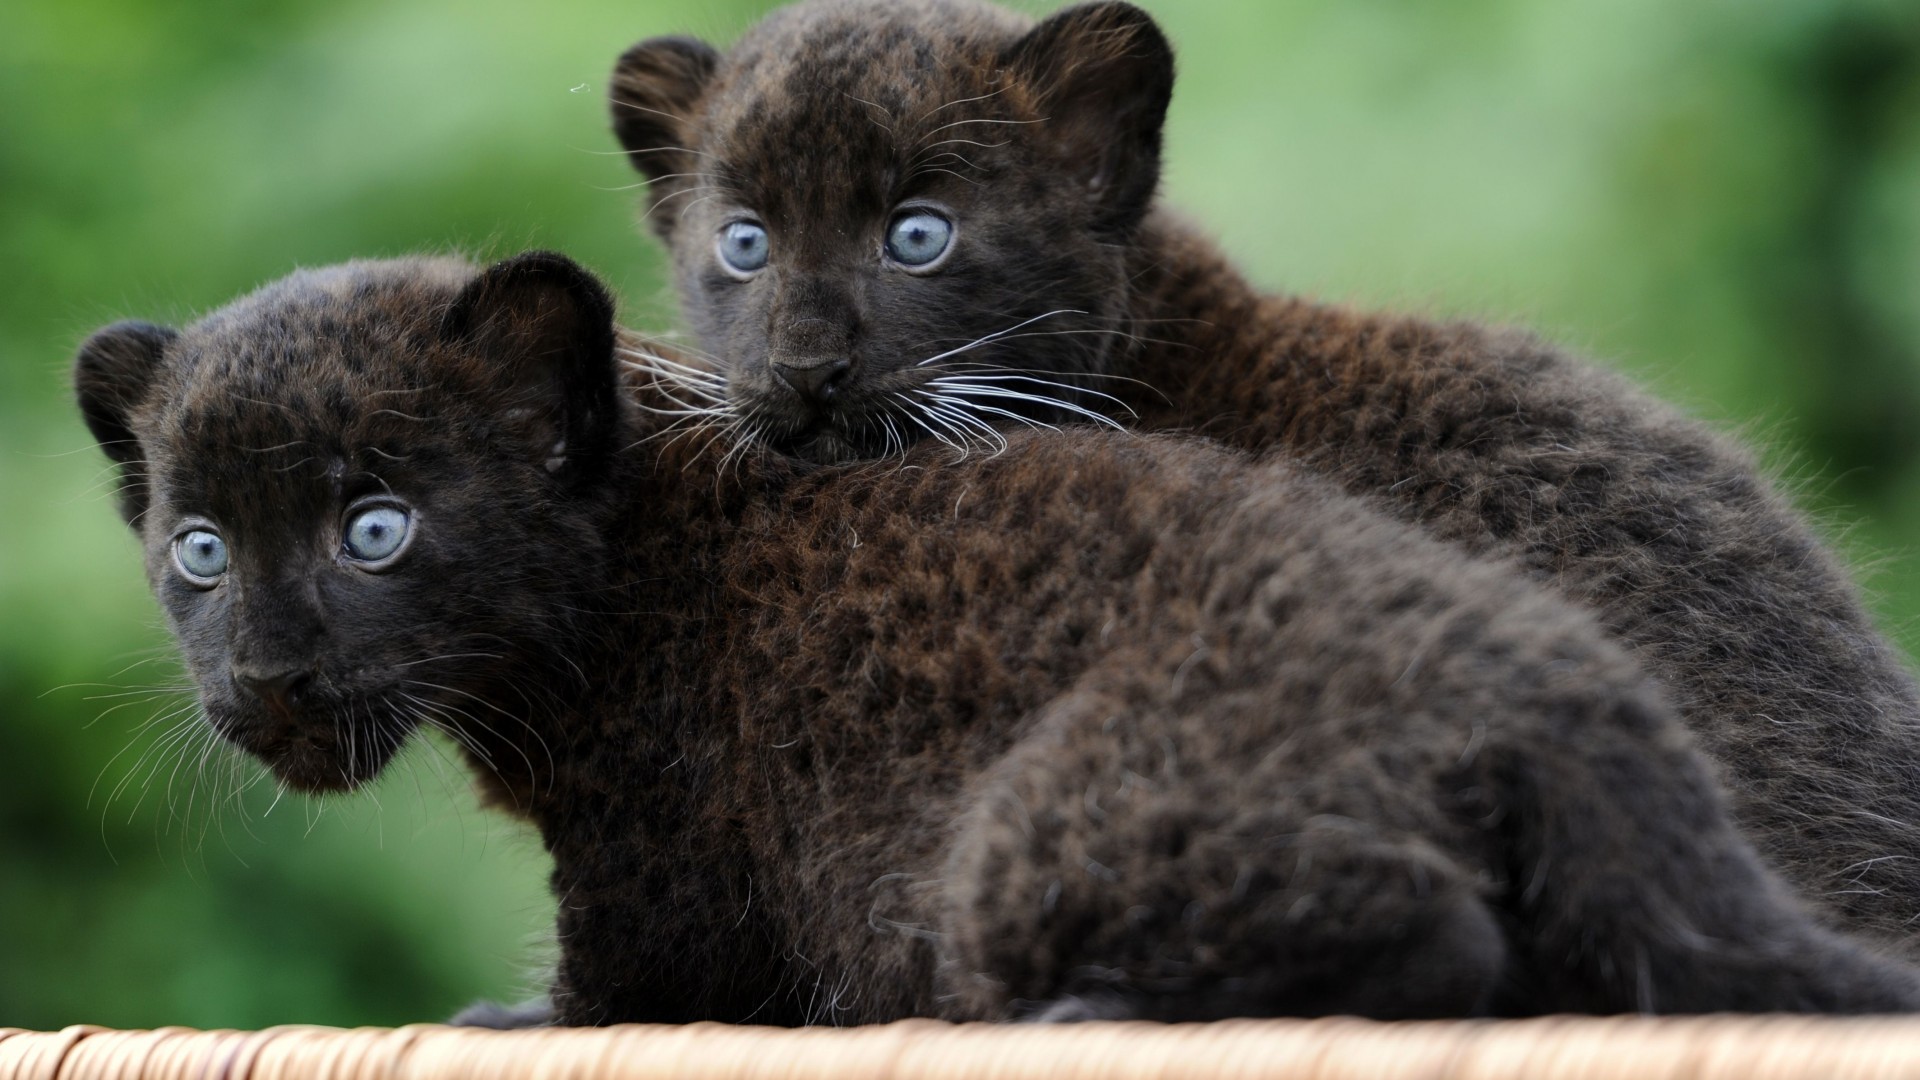 Panther, Cub, Cats, Kittens, black cat, fur, blue eyes, nature (horizontal)